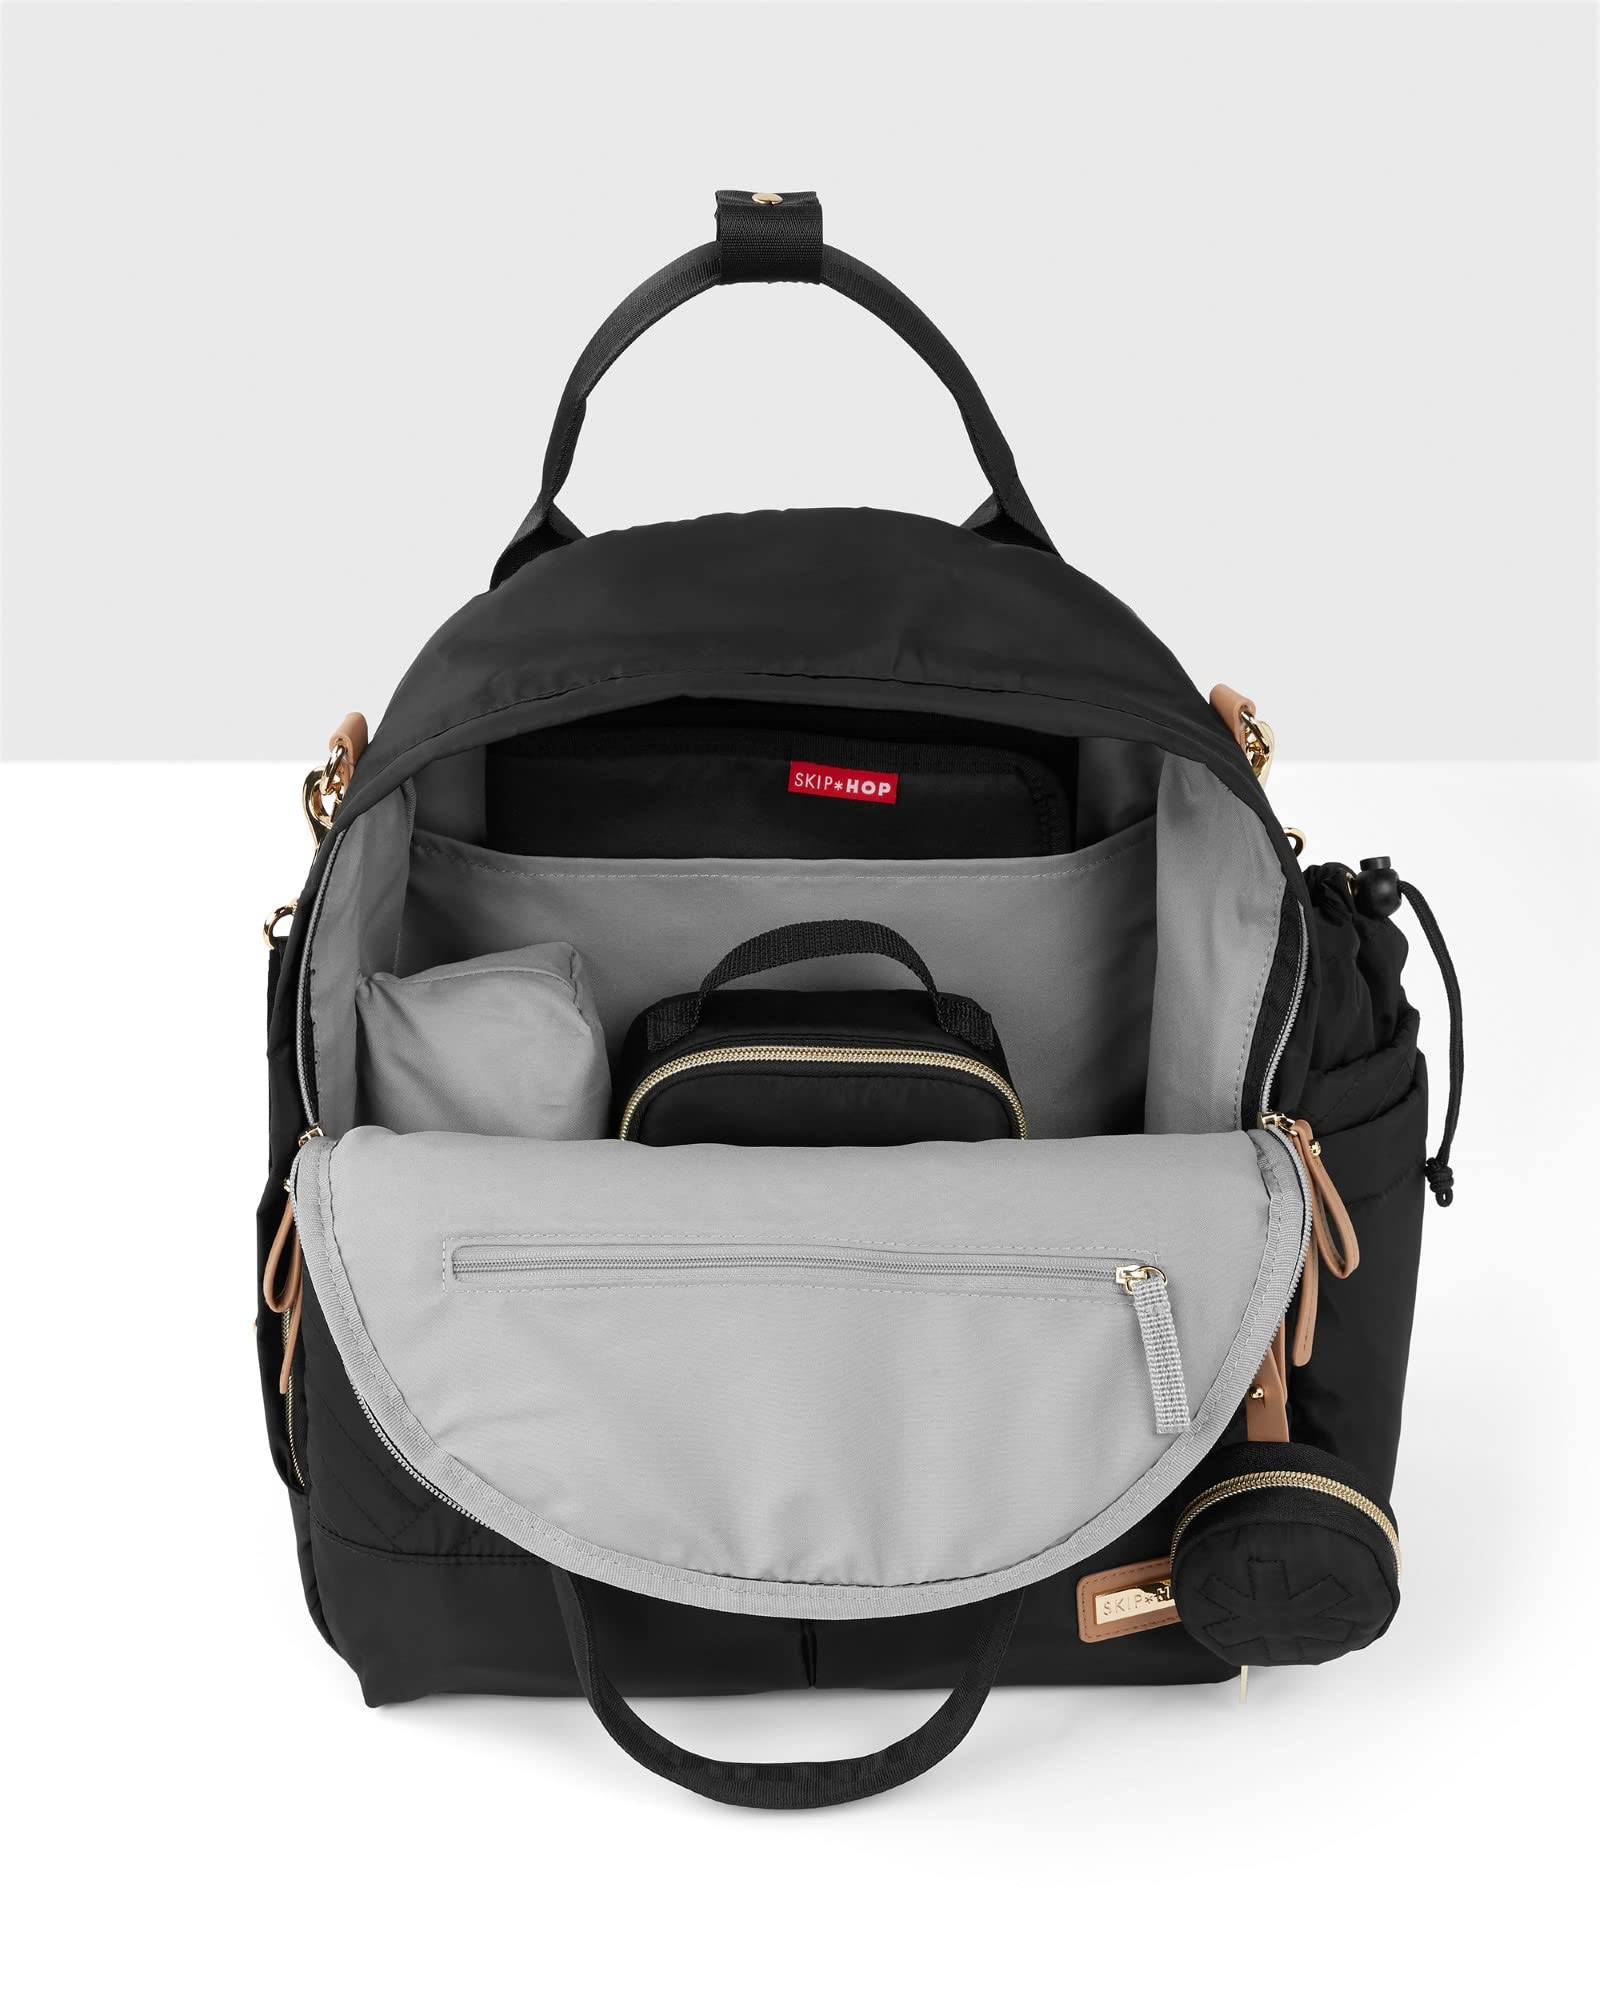 Skip Hop Diaper Bag Backpack: Suite 6-in-1 Diaper Backpack Set, Multi-Function Baby Travel Bag with Changing Pad, Stroller Straps, Bottle Bag and Pacifier Pocket, Black